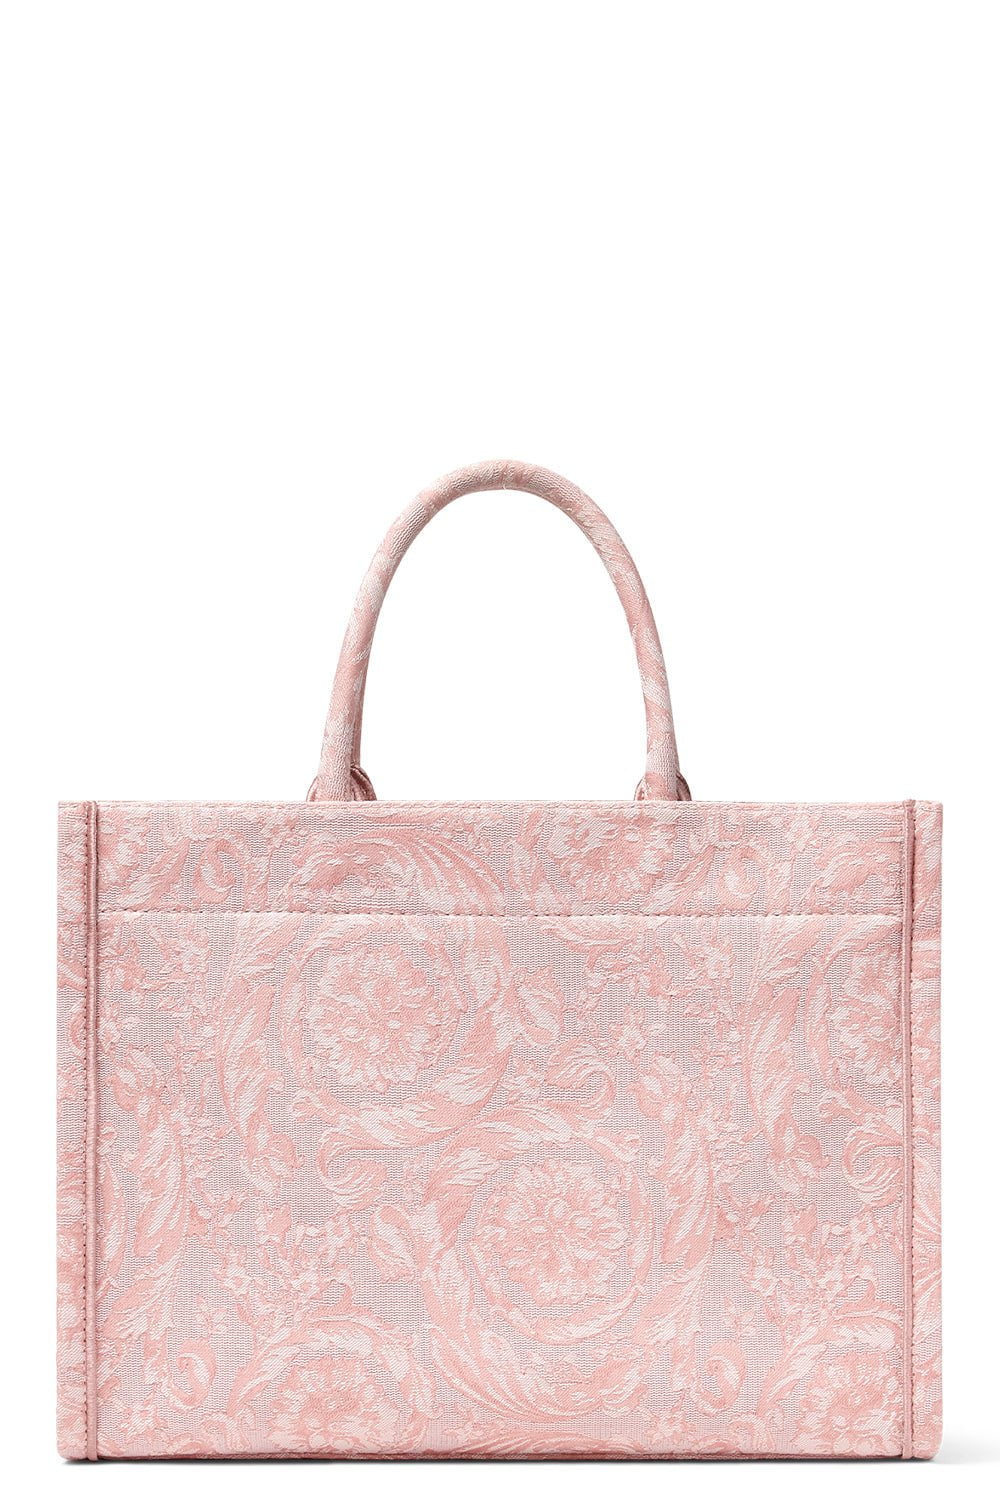 VERSACE-Barocco Athena Tote Bag - Pink Rose-PNK/RSE